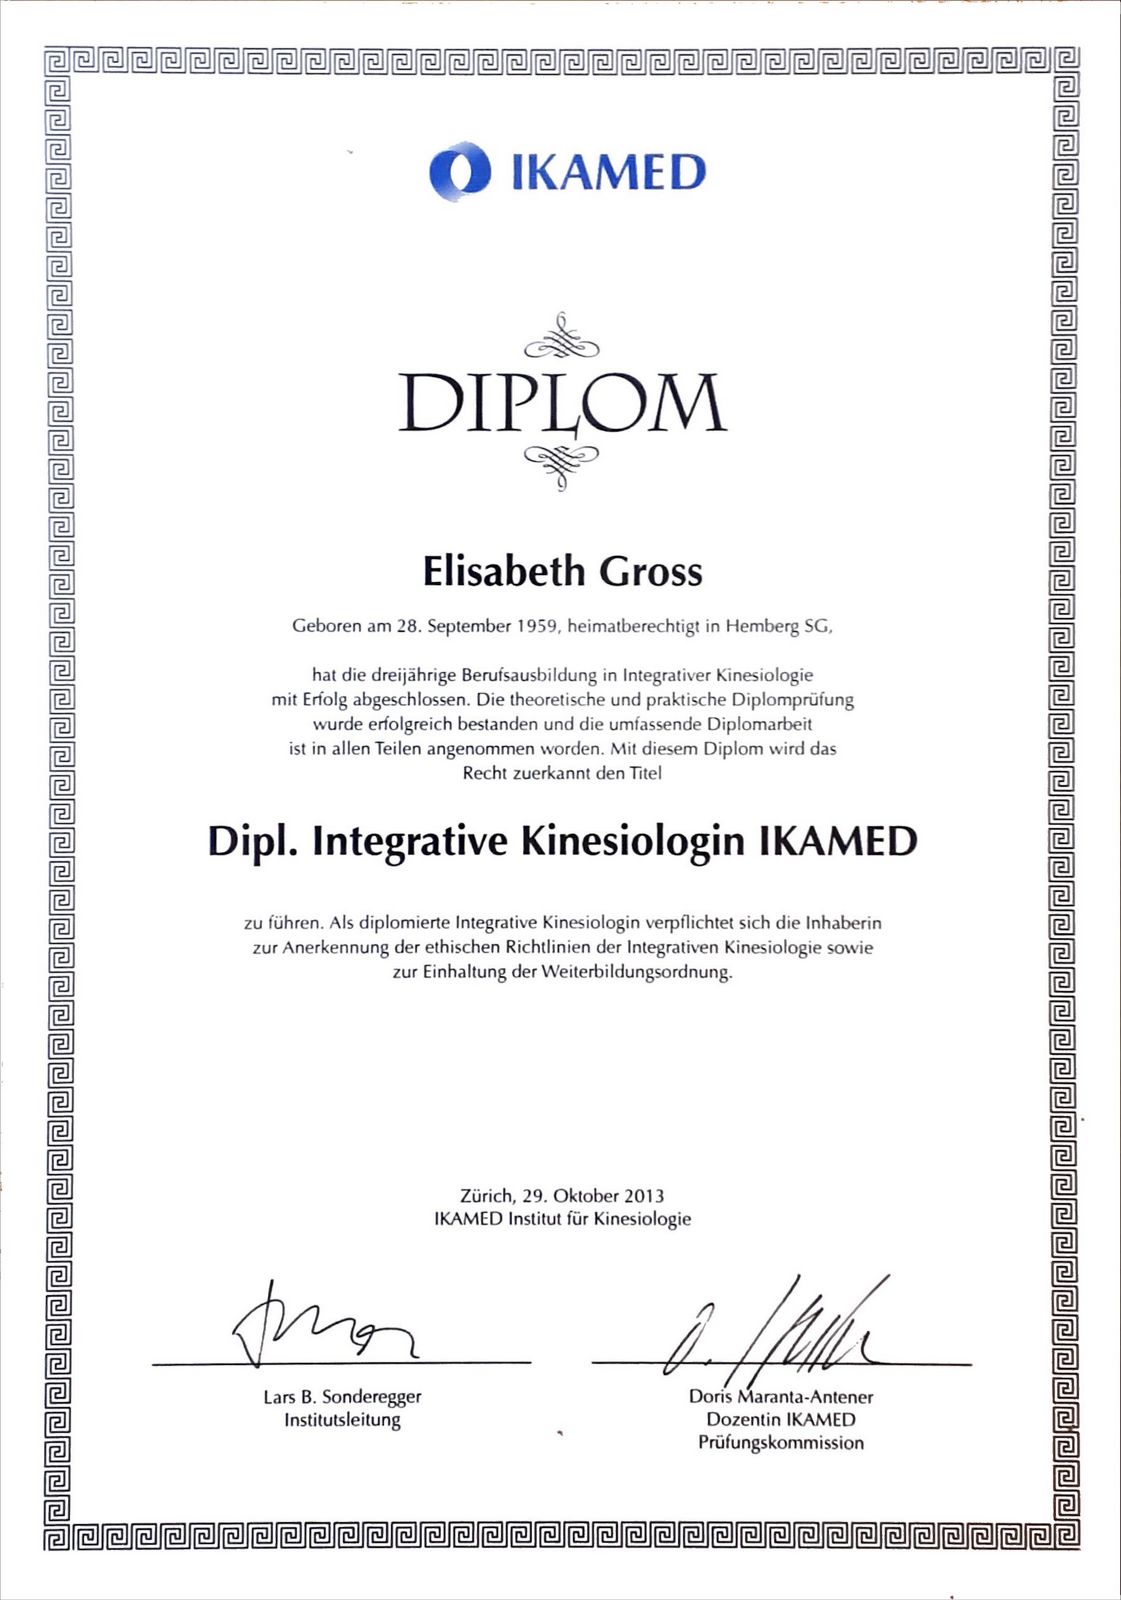 Diplom von Elisabeth Gross für Dipl. Integrative Kinesiologie IKAMED